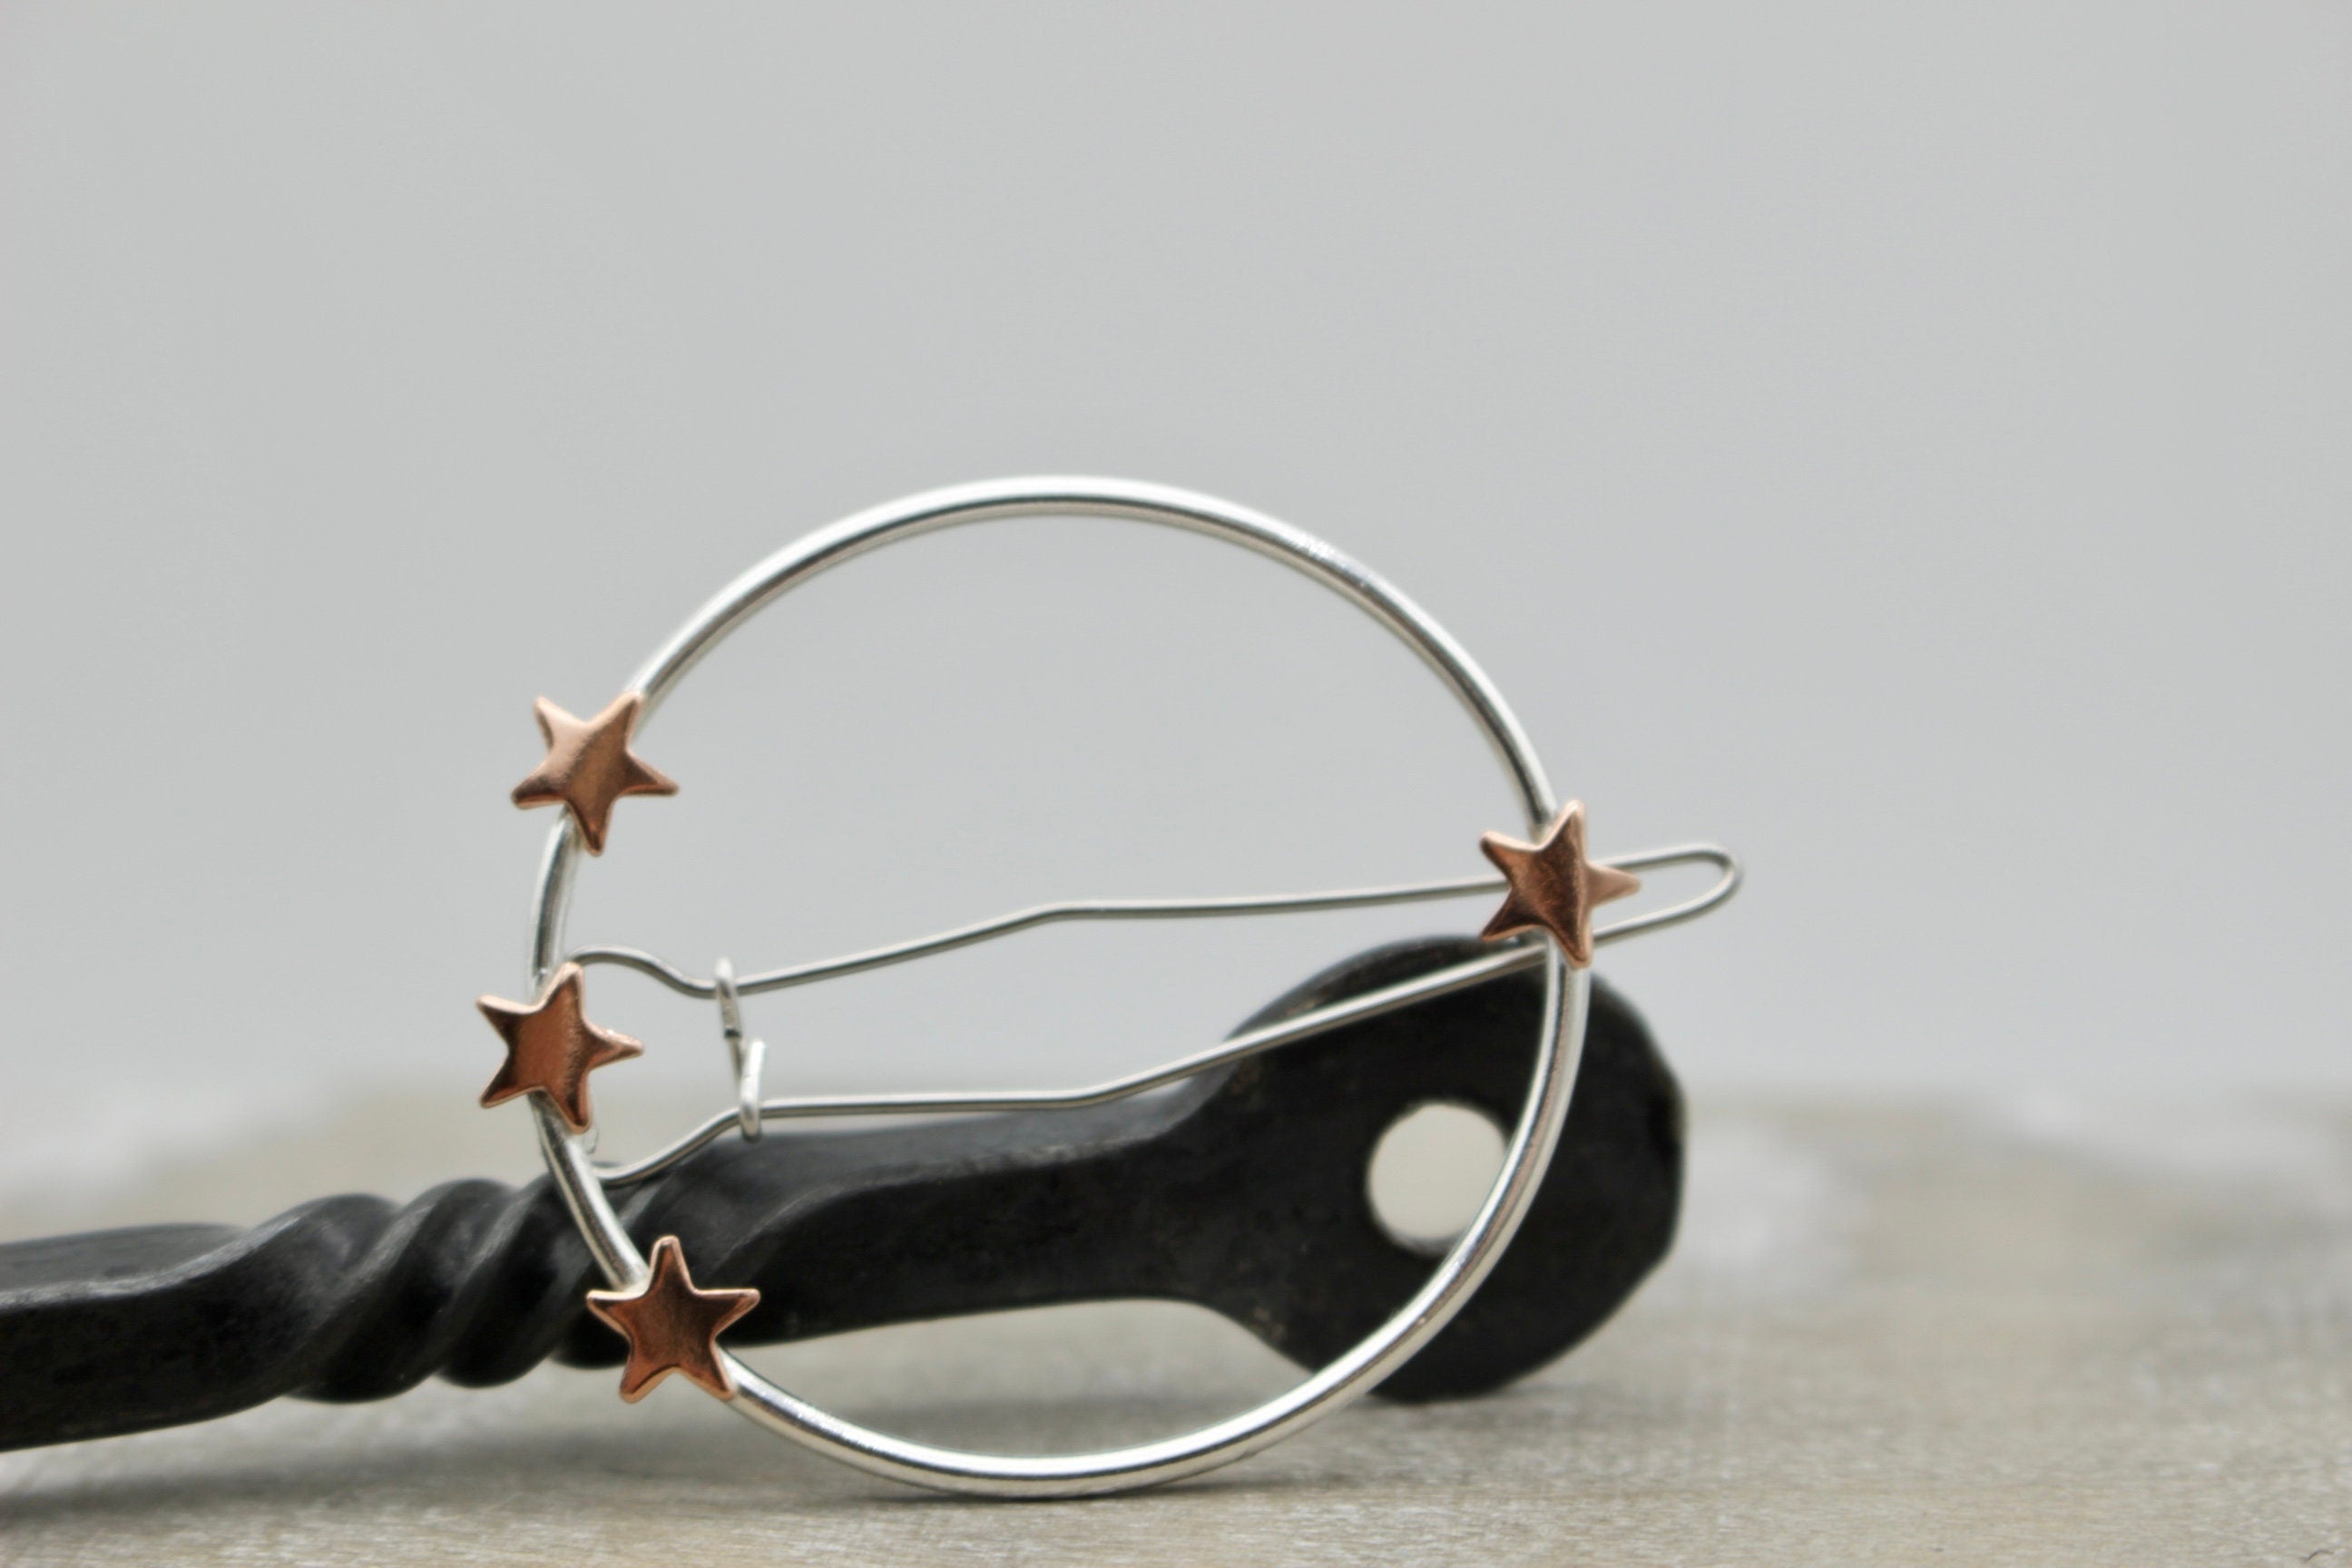 Sterling copper circle barrette - Star barrette - Small sterling silver barrette - gift for her - small barrette - hair jewelry - bangs